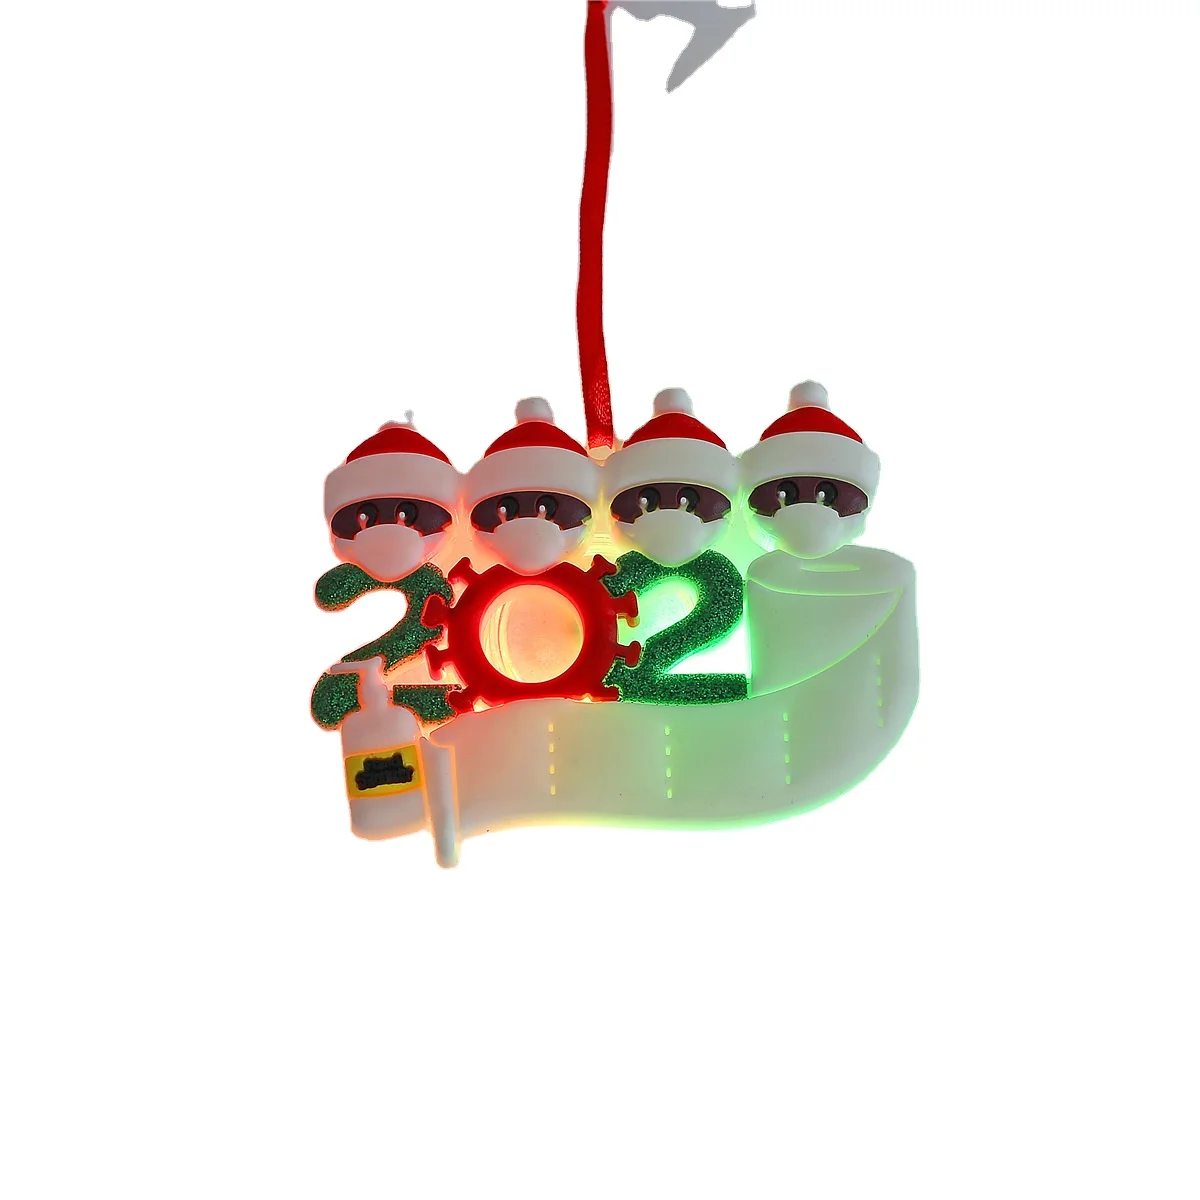 2020 new Christmas lights decorative PVC Christmas tree hanging ornaments